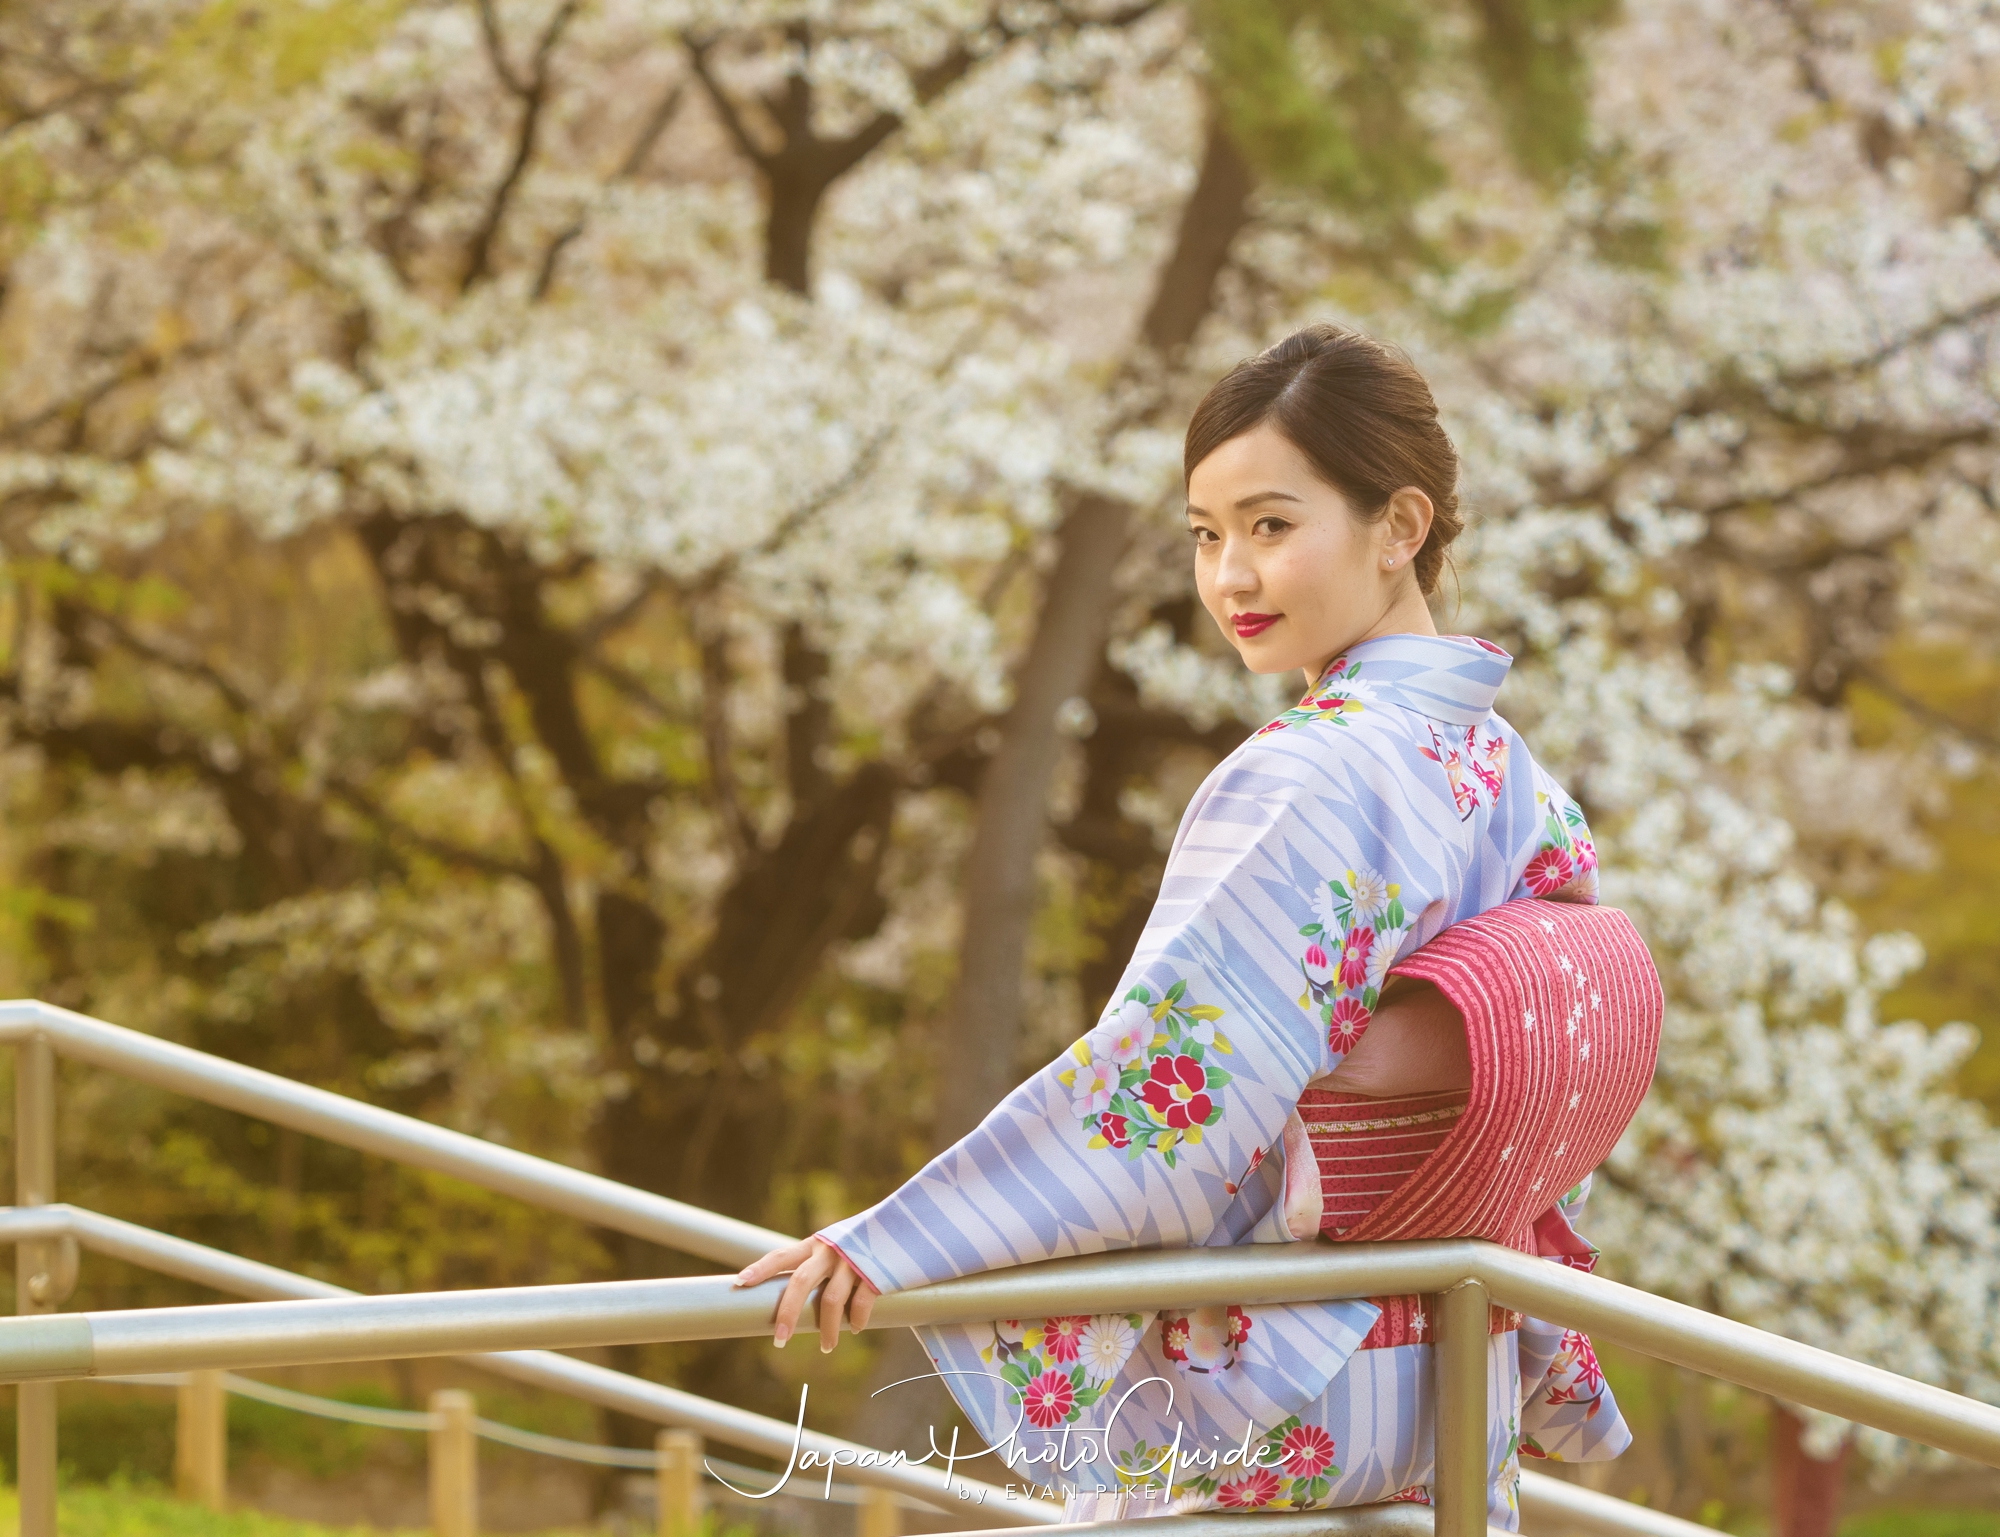 2019 Cherry Blossom Photo Tour | Tokyo Portrait Session | Japan Photo ...